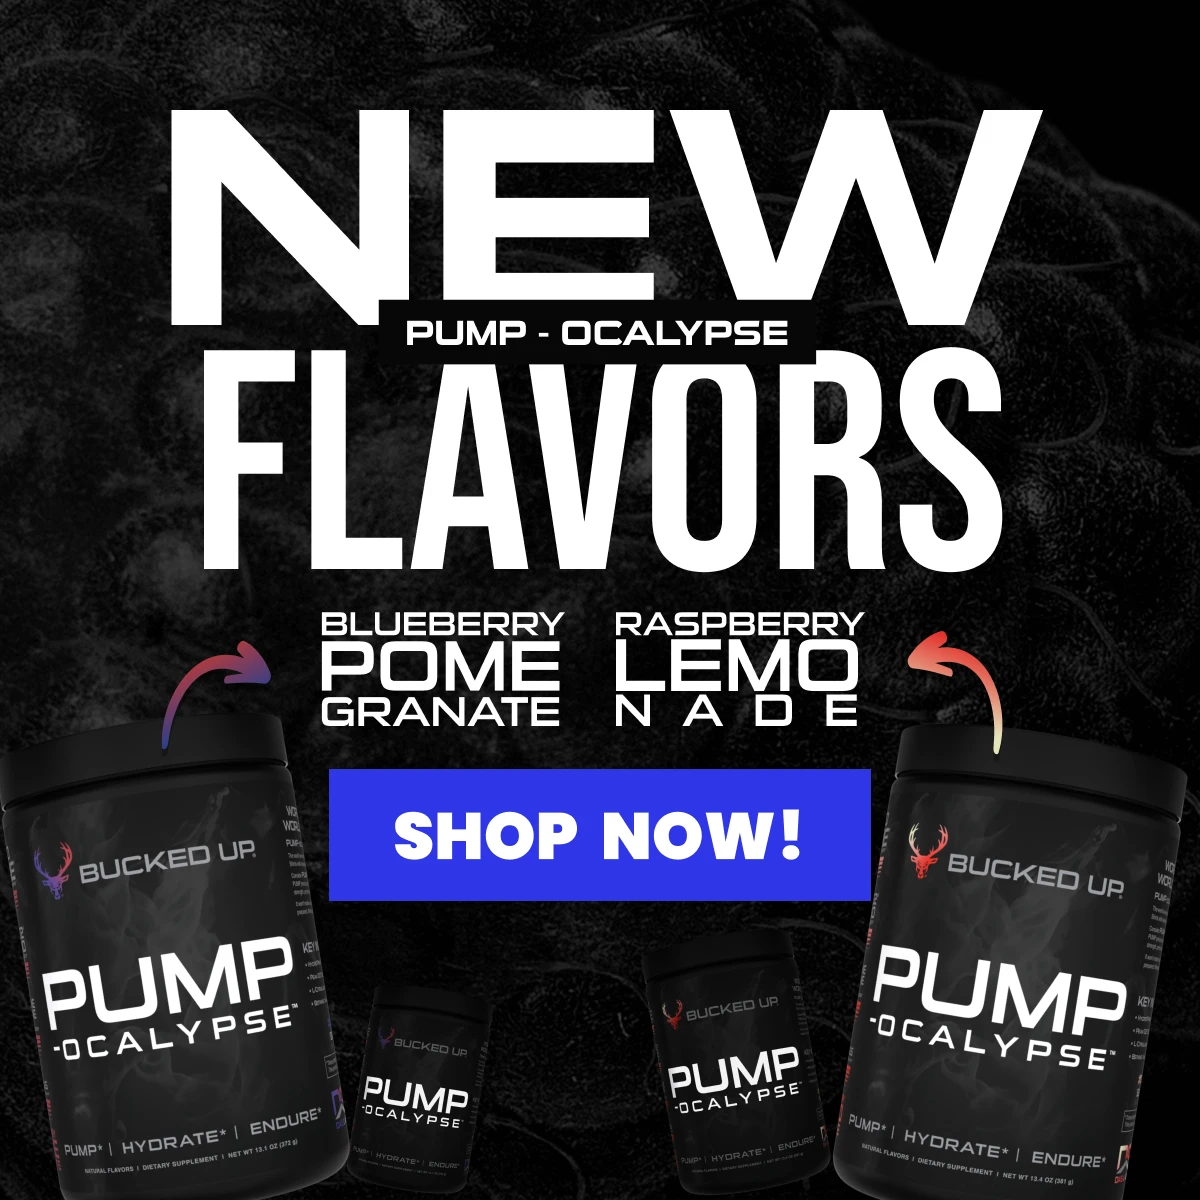 PUMP-ocalypse New Flavors